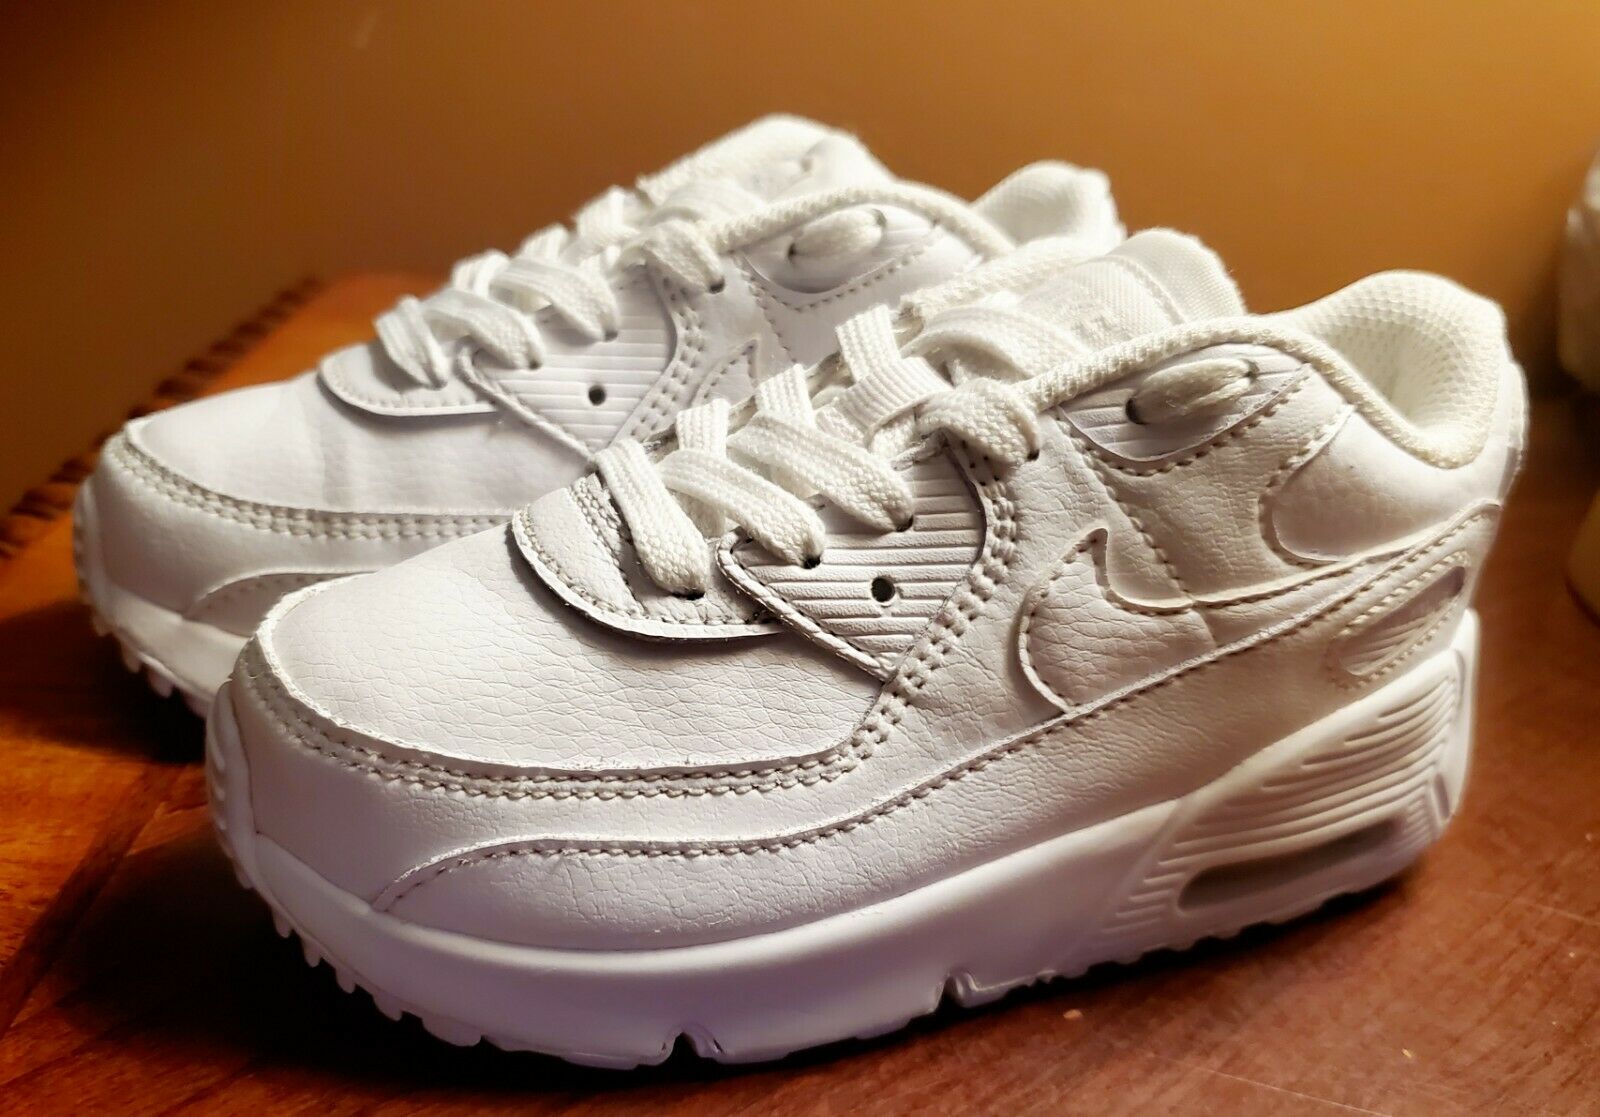 NIKE Air Max 90 Running Shoes - Triple White - Toddler Size 9C - CD6868 100